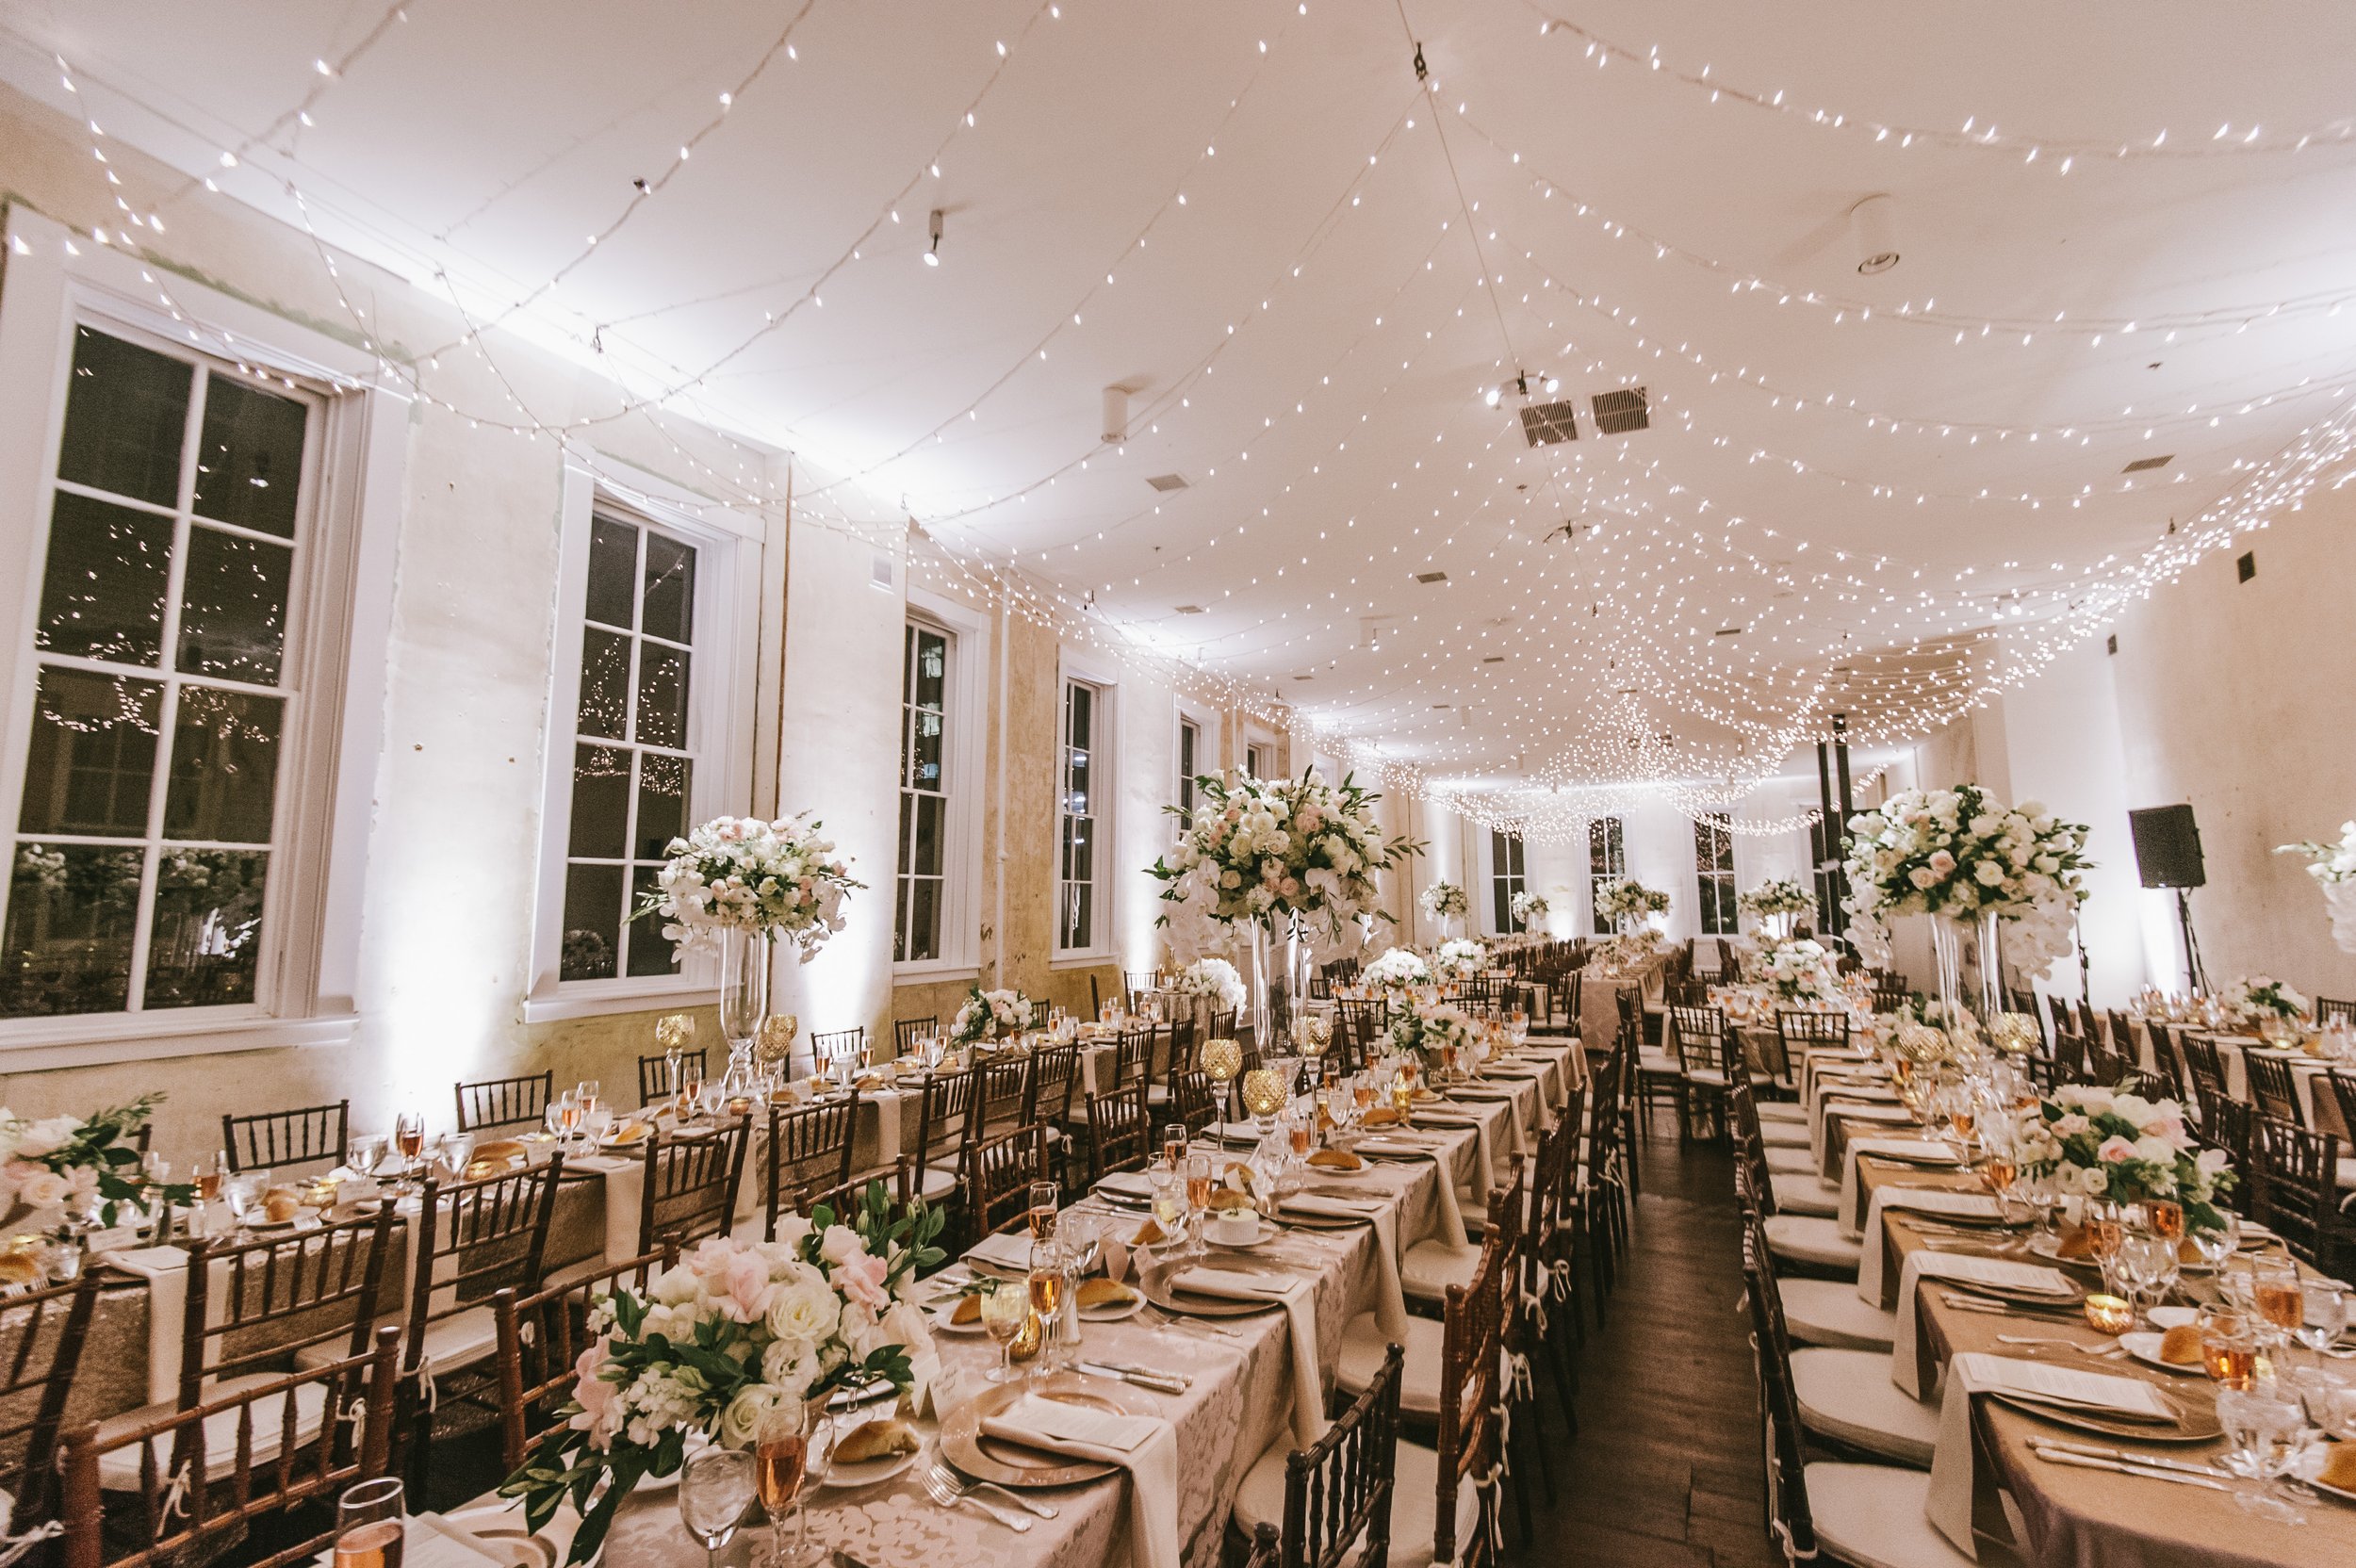 Elegant extravagant wedding reception dinner tables hanging lights